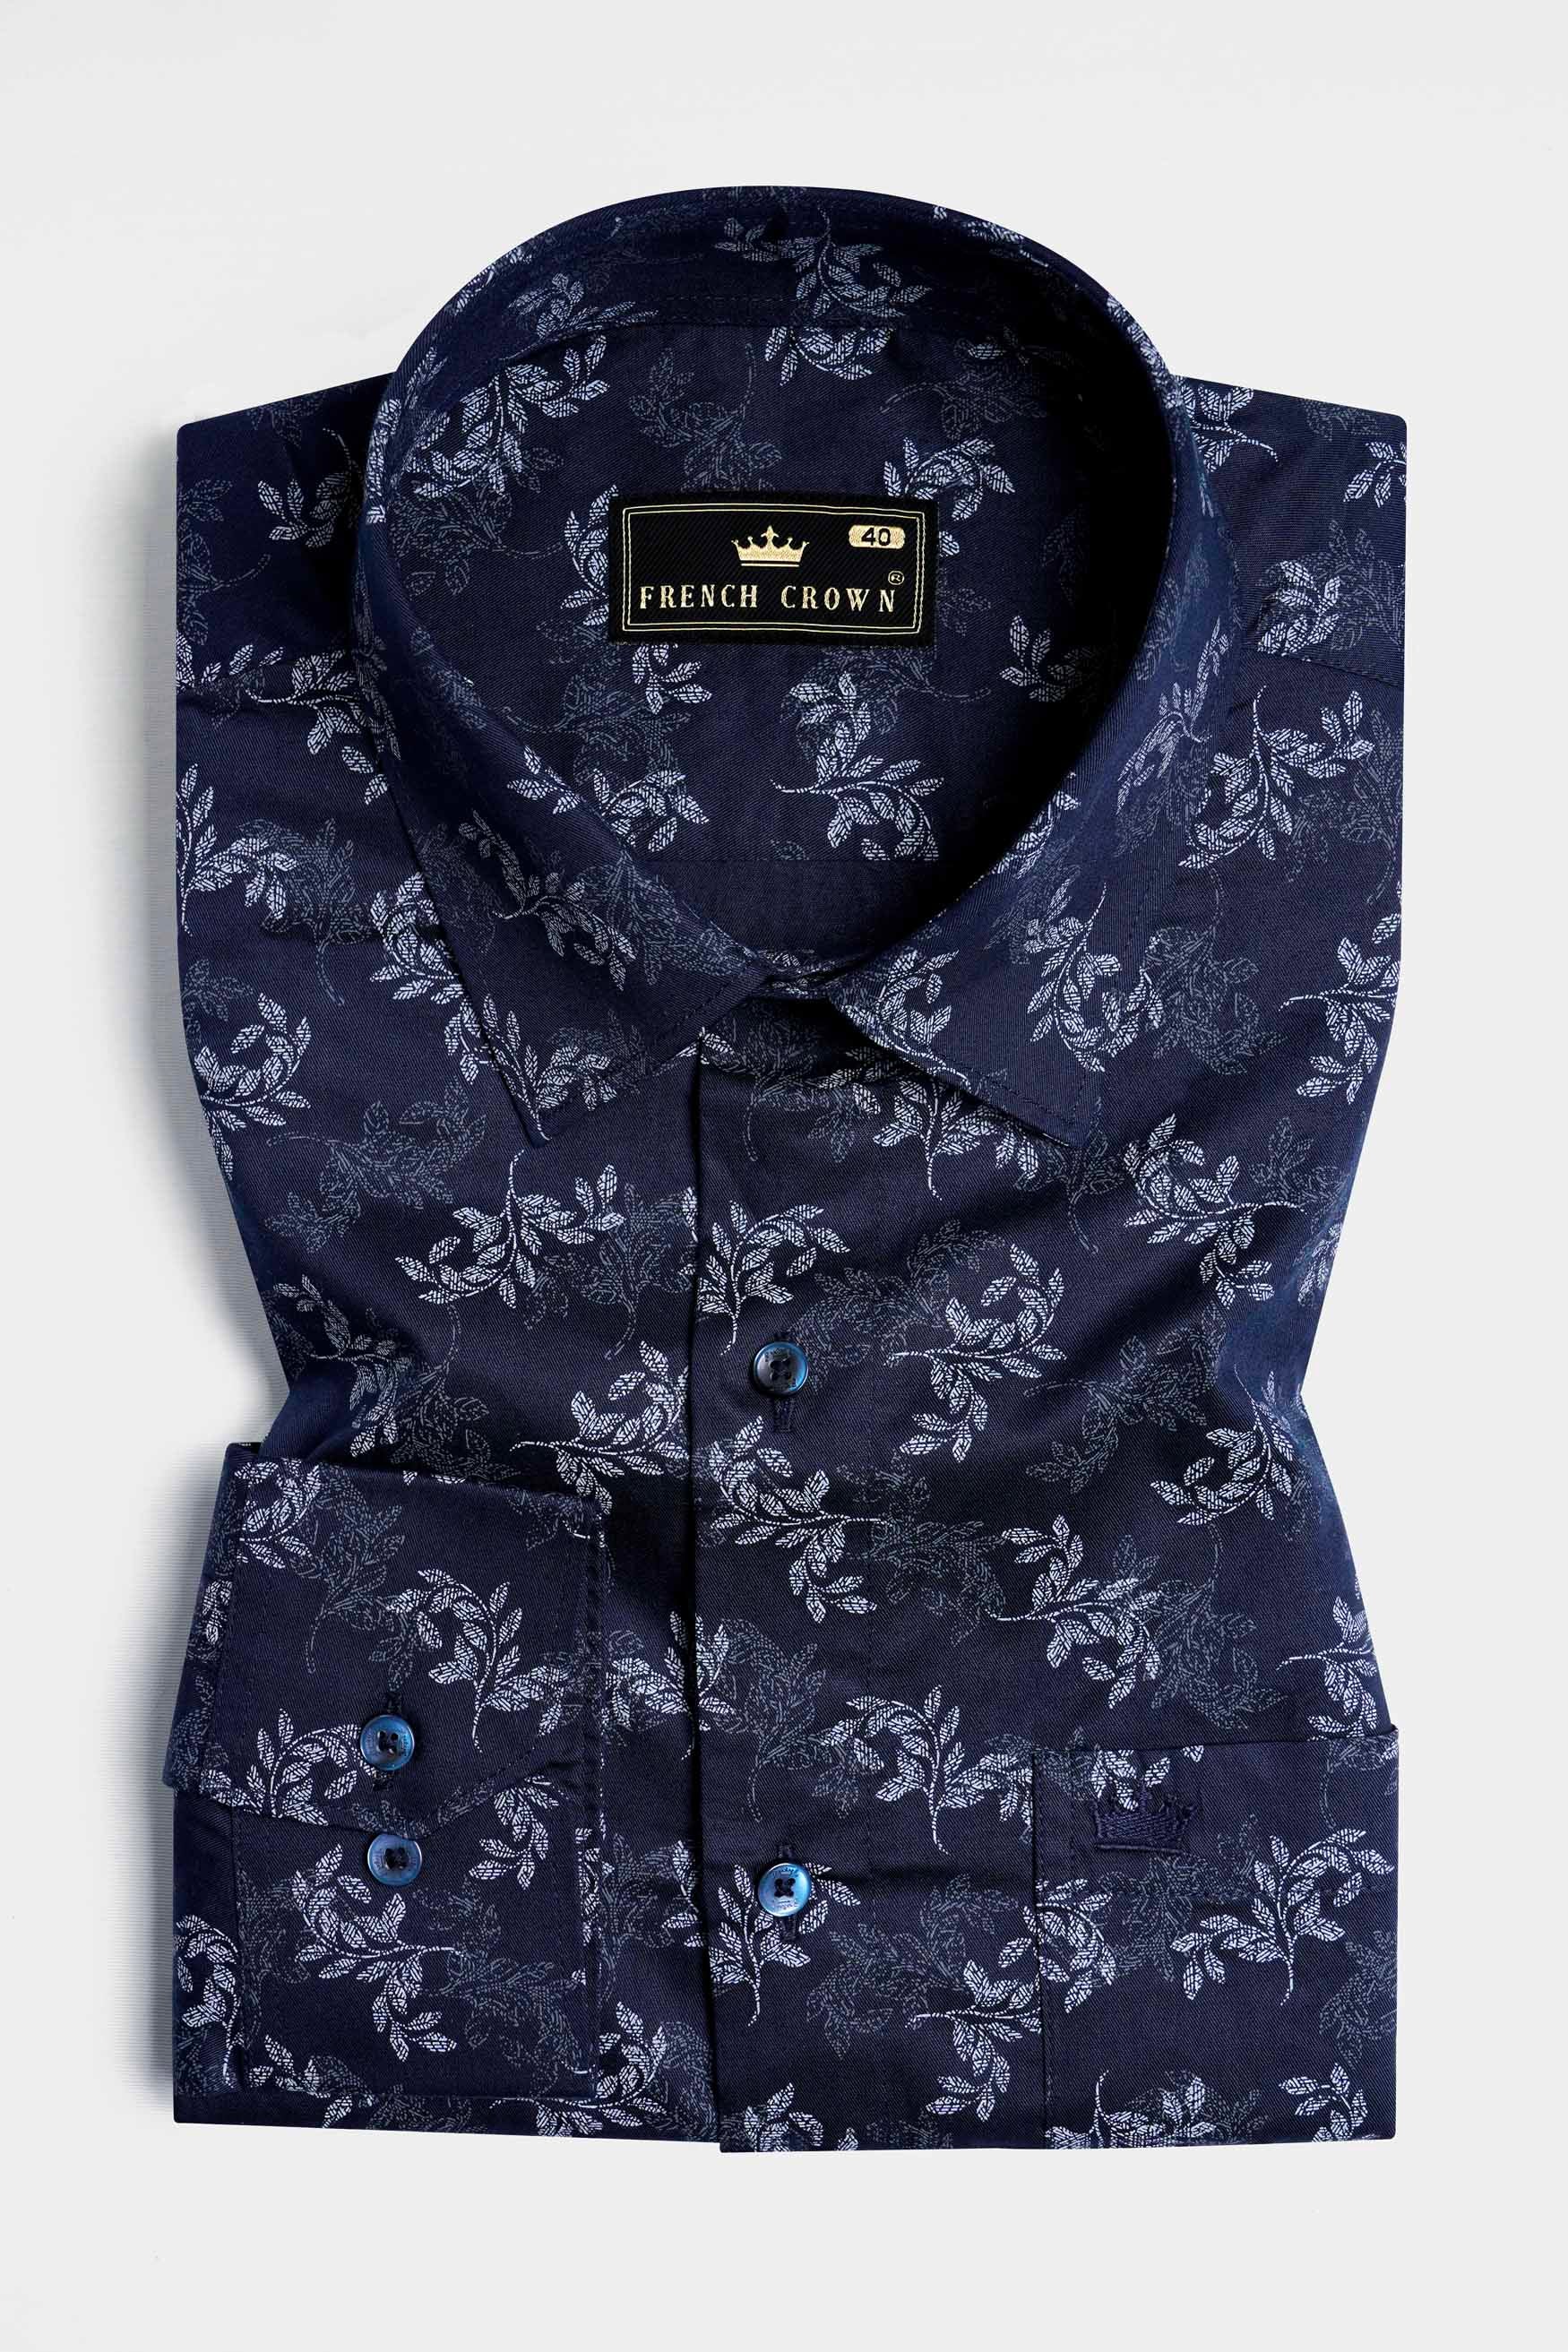 Haiti Blue Leaves Printed Twill Premium Cotton Shirt